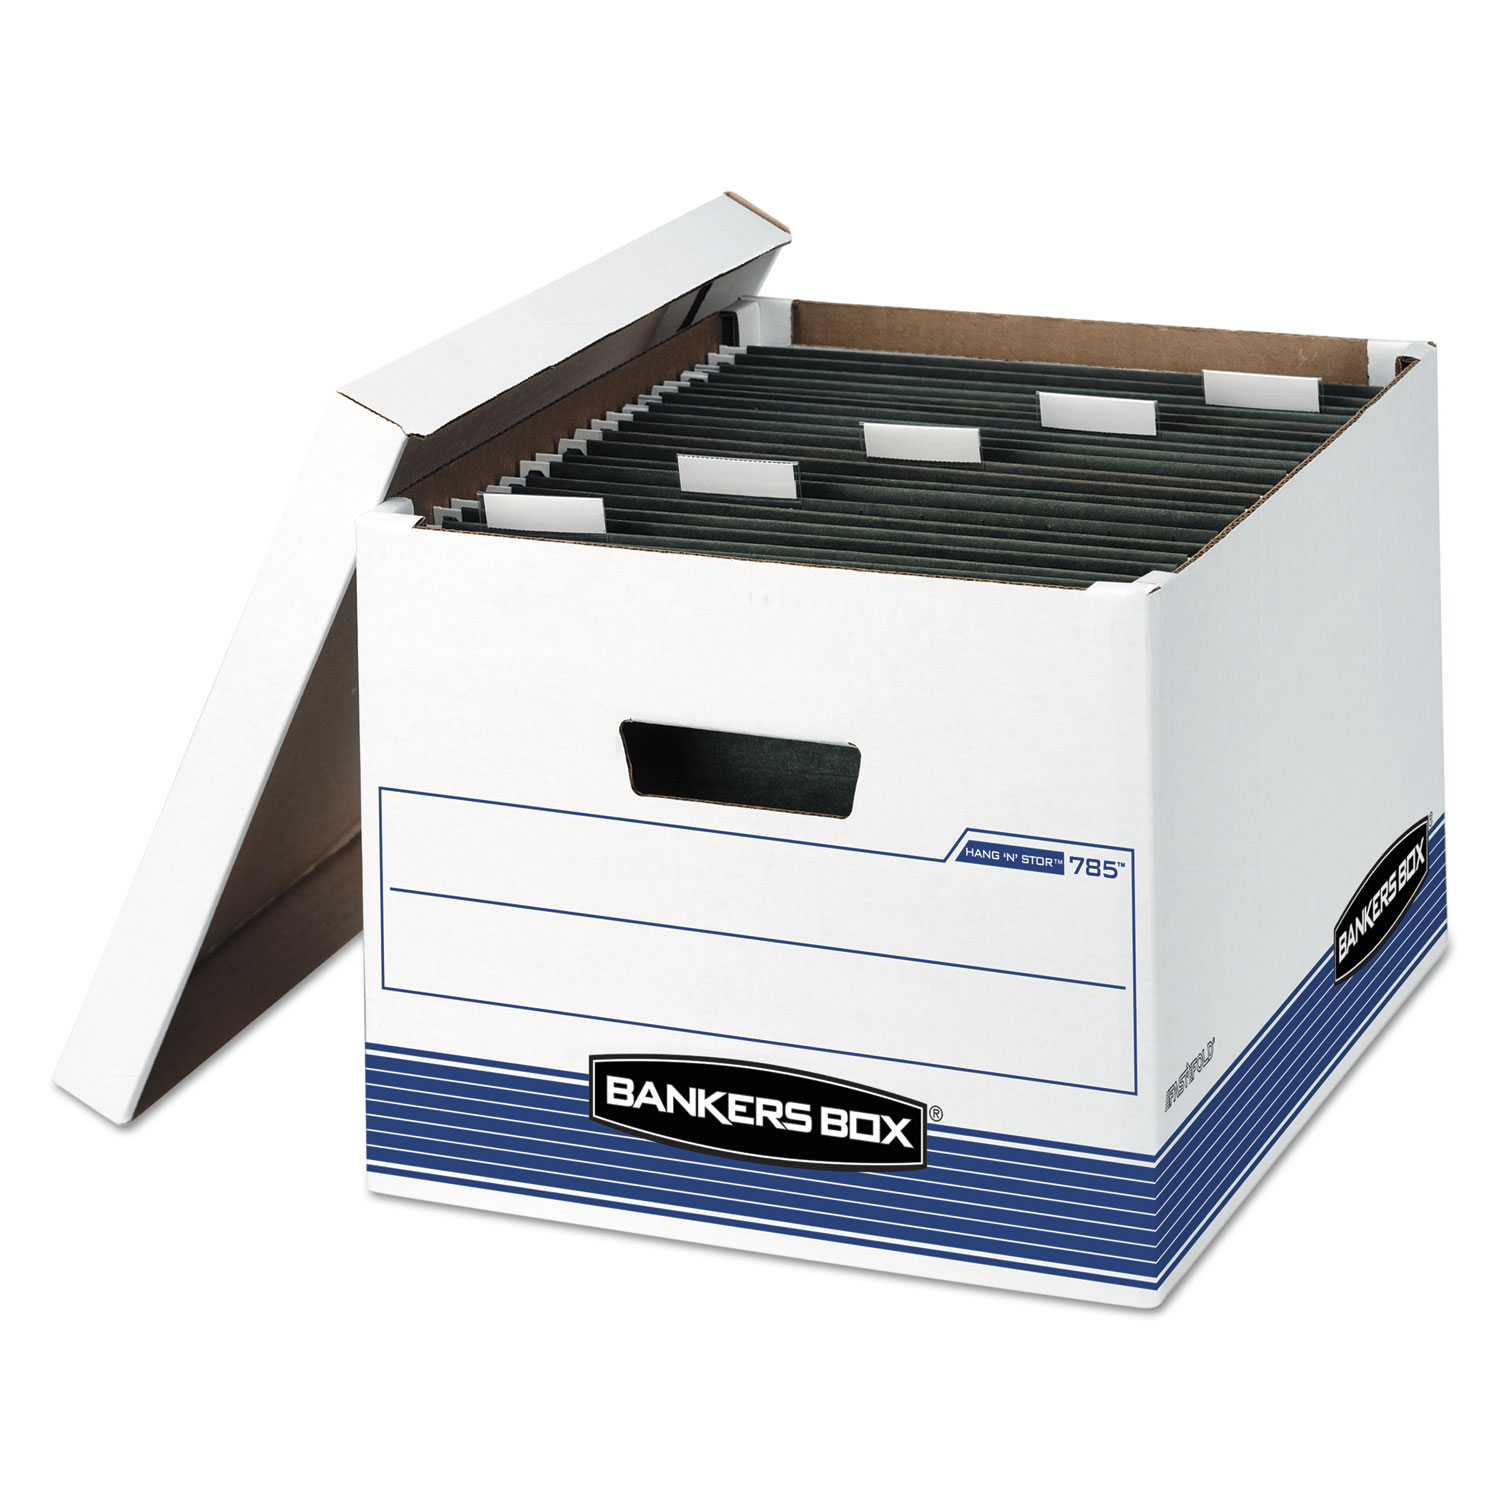  Bankers Box 00785 HANG'N'STOR Medium-Duty Storage Boxes, Letter/Legal Files, 13 x 16 x 10.5, White/Blue, 4/Carton (FEL00785) 